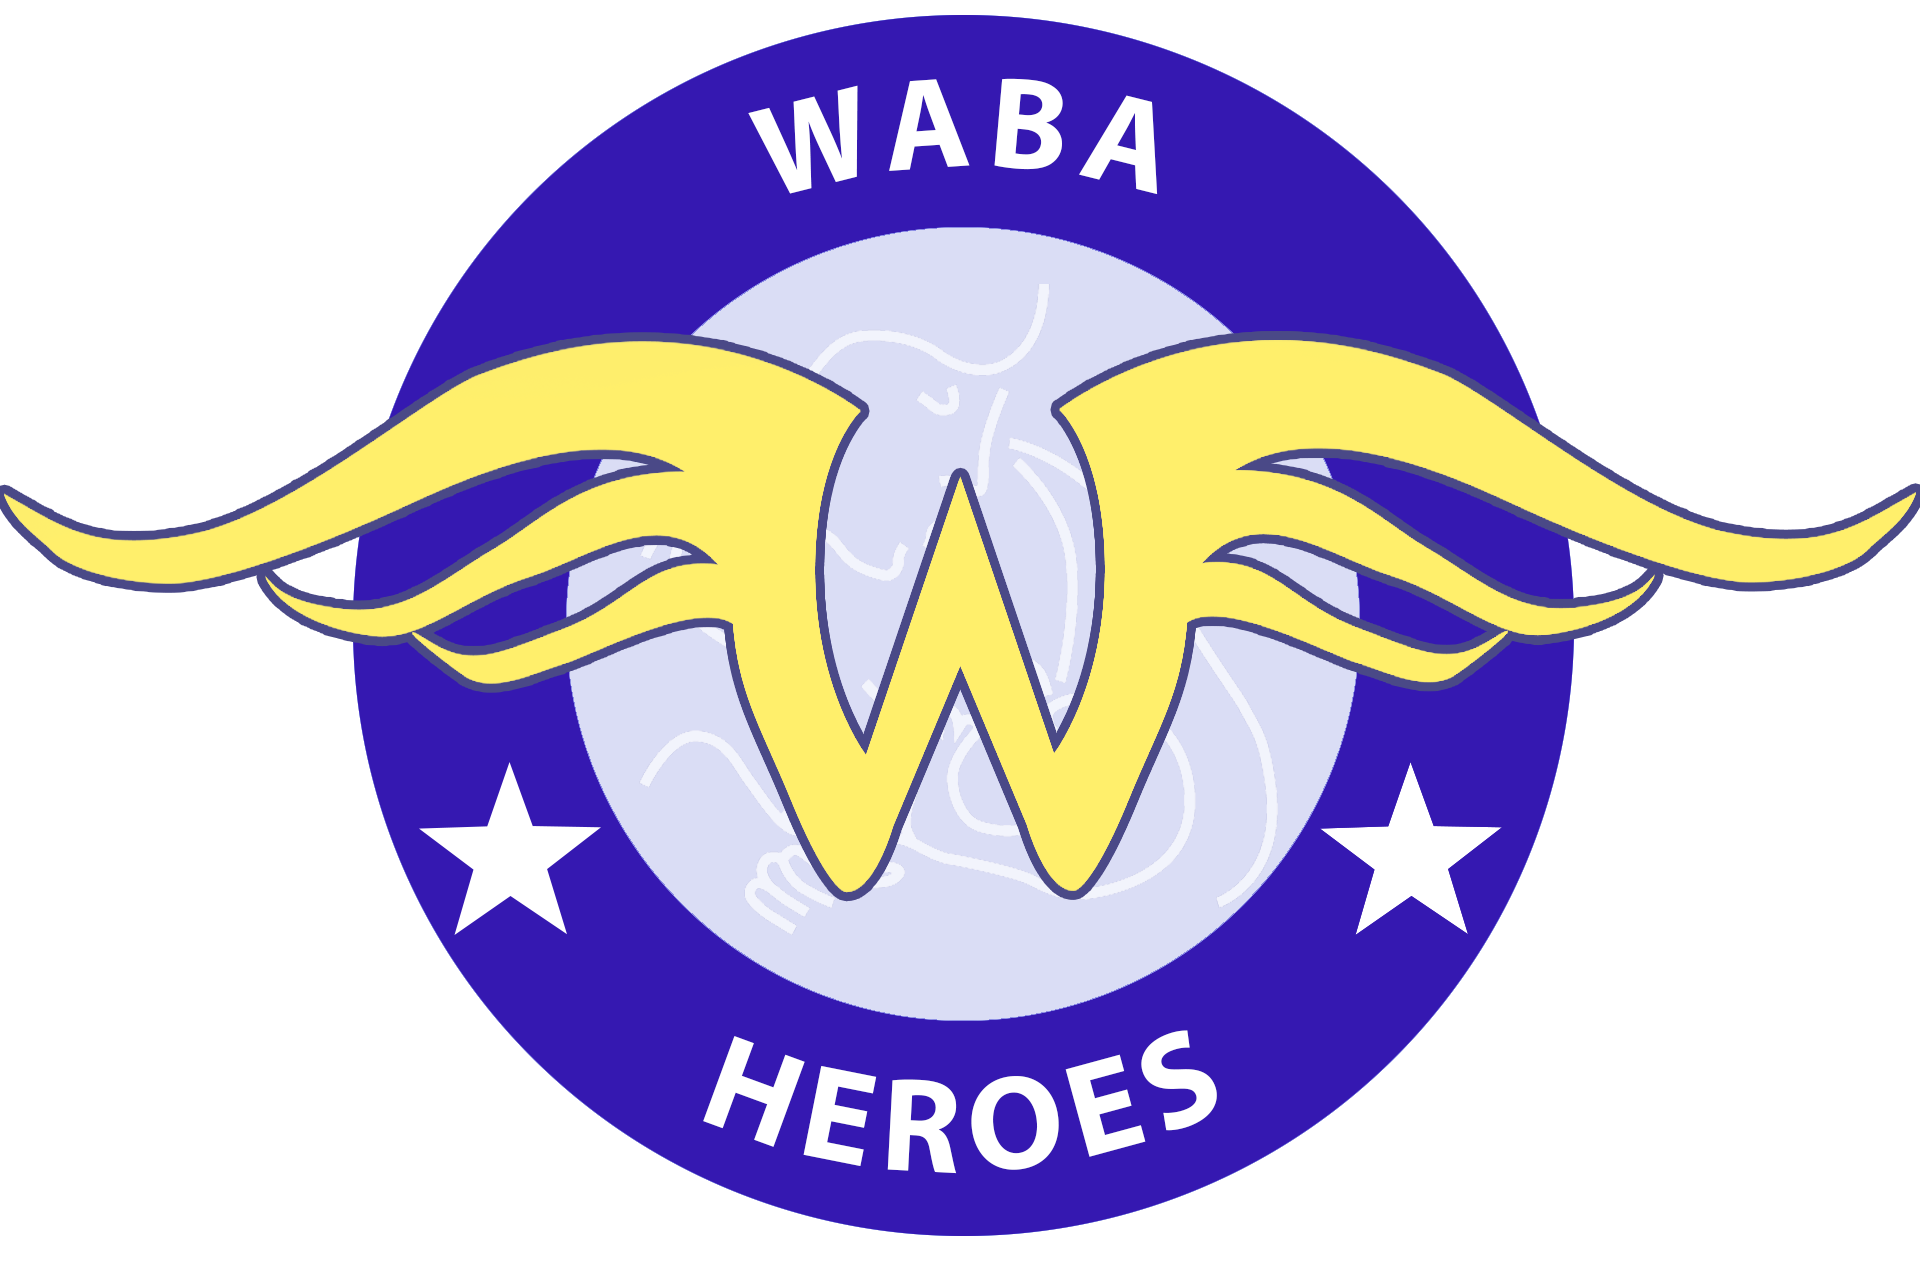 WABA Heroes